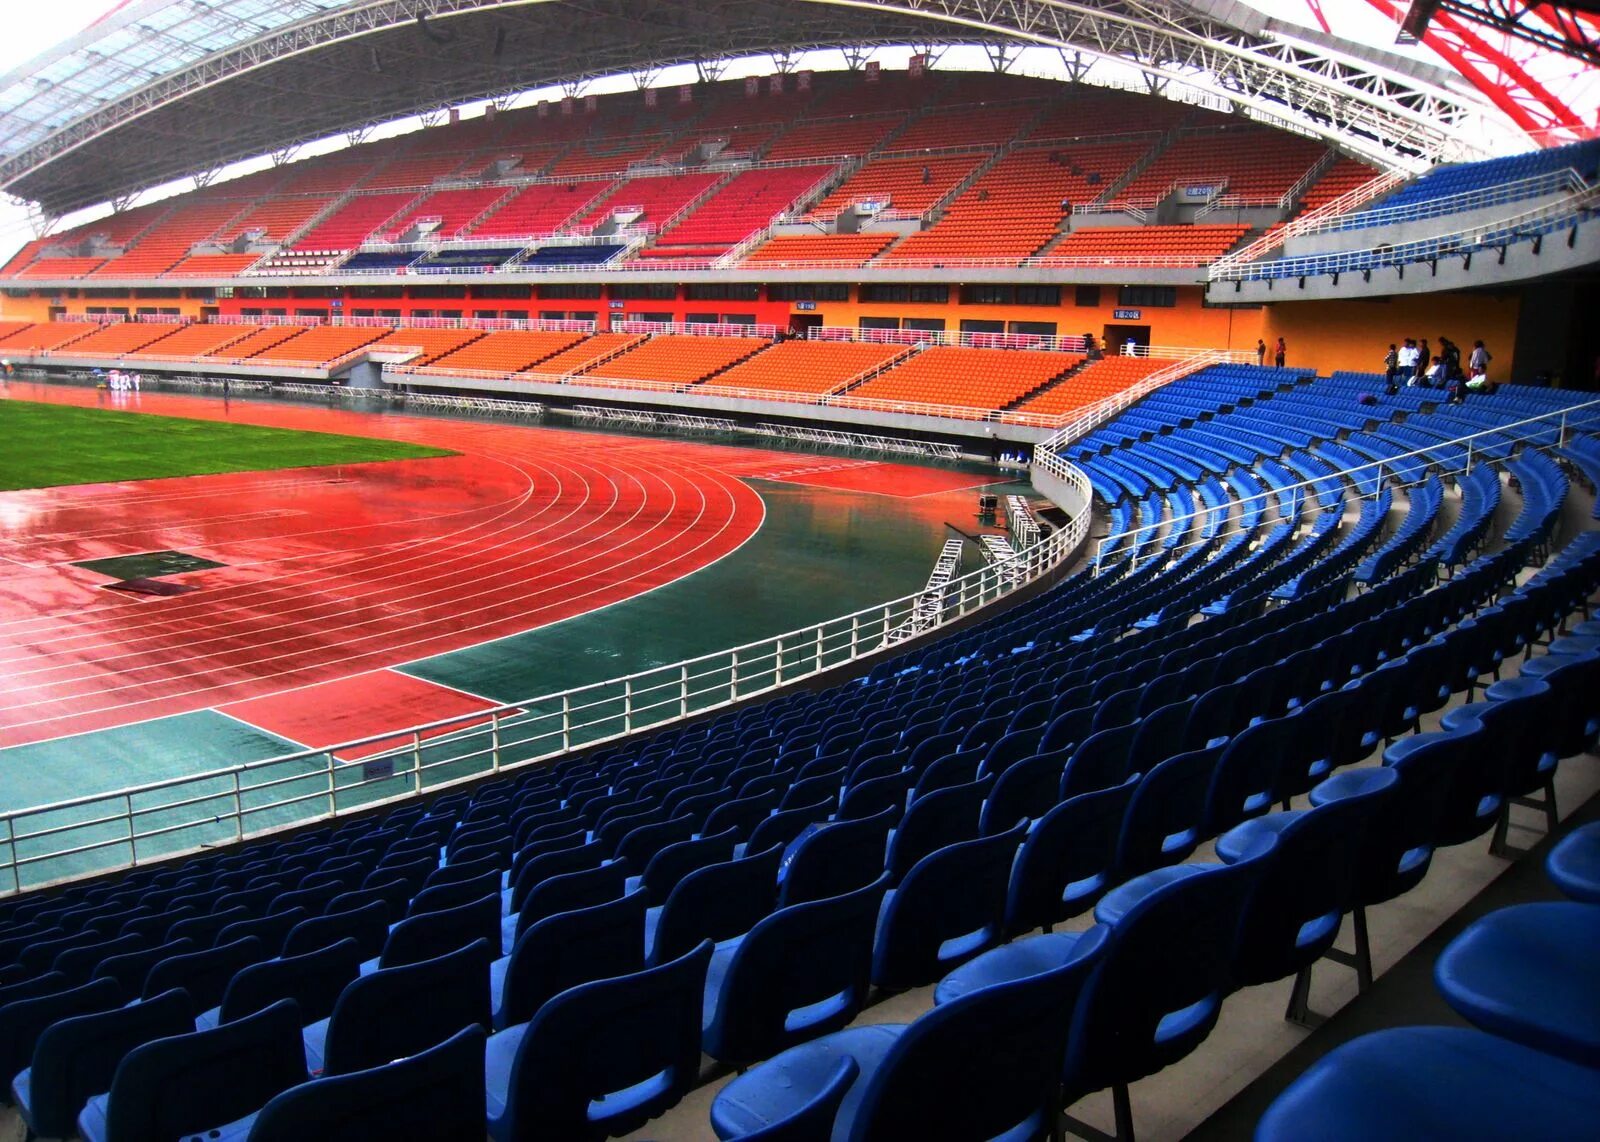 Zibo Sports Center Stadium. Huangpu Sports Center Stadium. Стадион казино. Стадион олимпийского спорткомплекса города Циньхуандао.